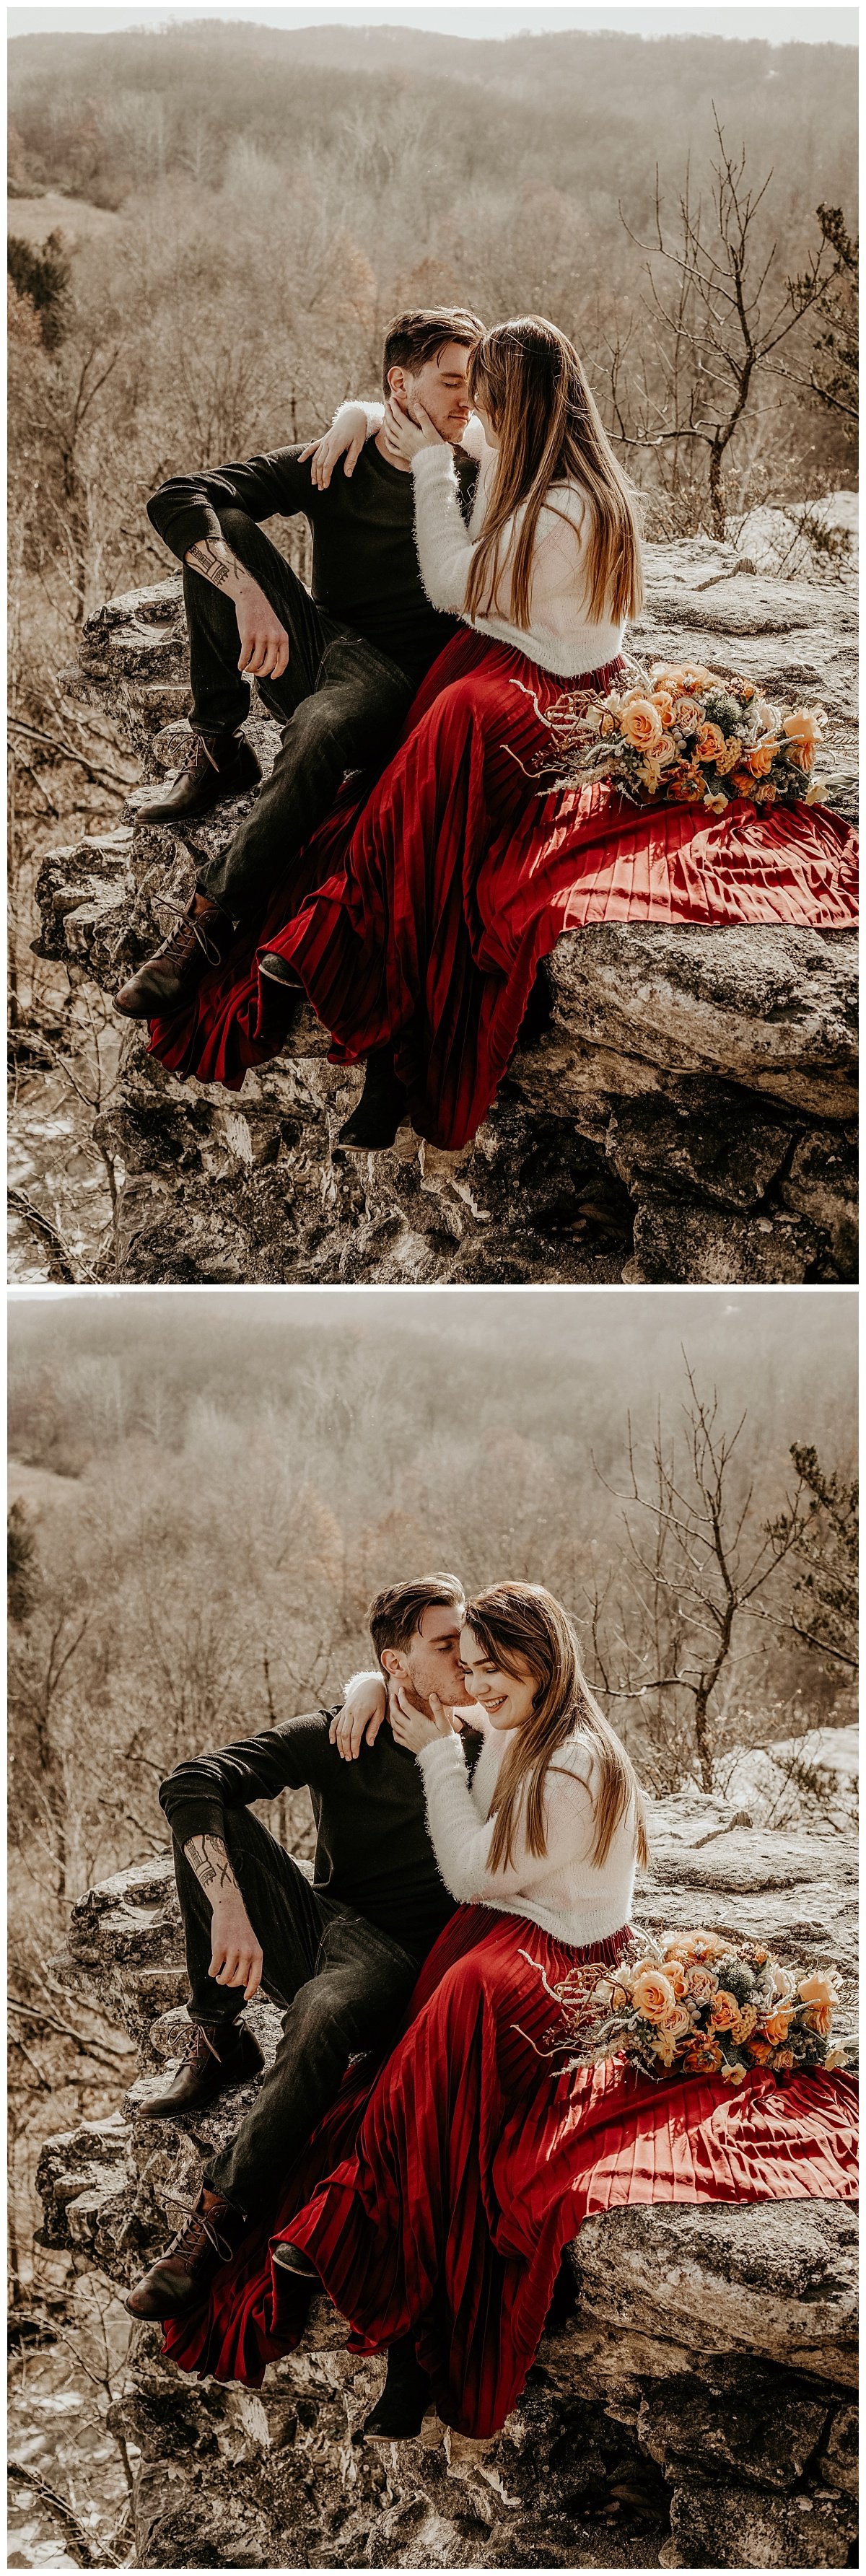 Couples+Adventure+Session+_+Mountain+Couples+Photos+_+Kansas+City+Engagement+Photography+Kansas+City+Wedding+Photography (2).jpeg